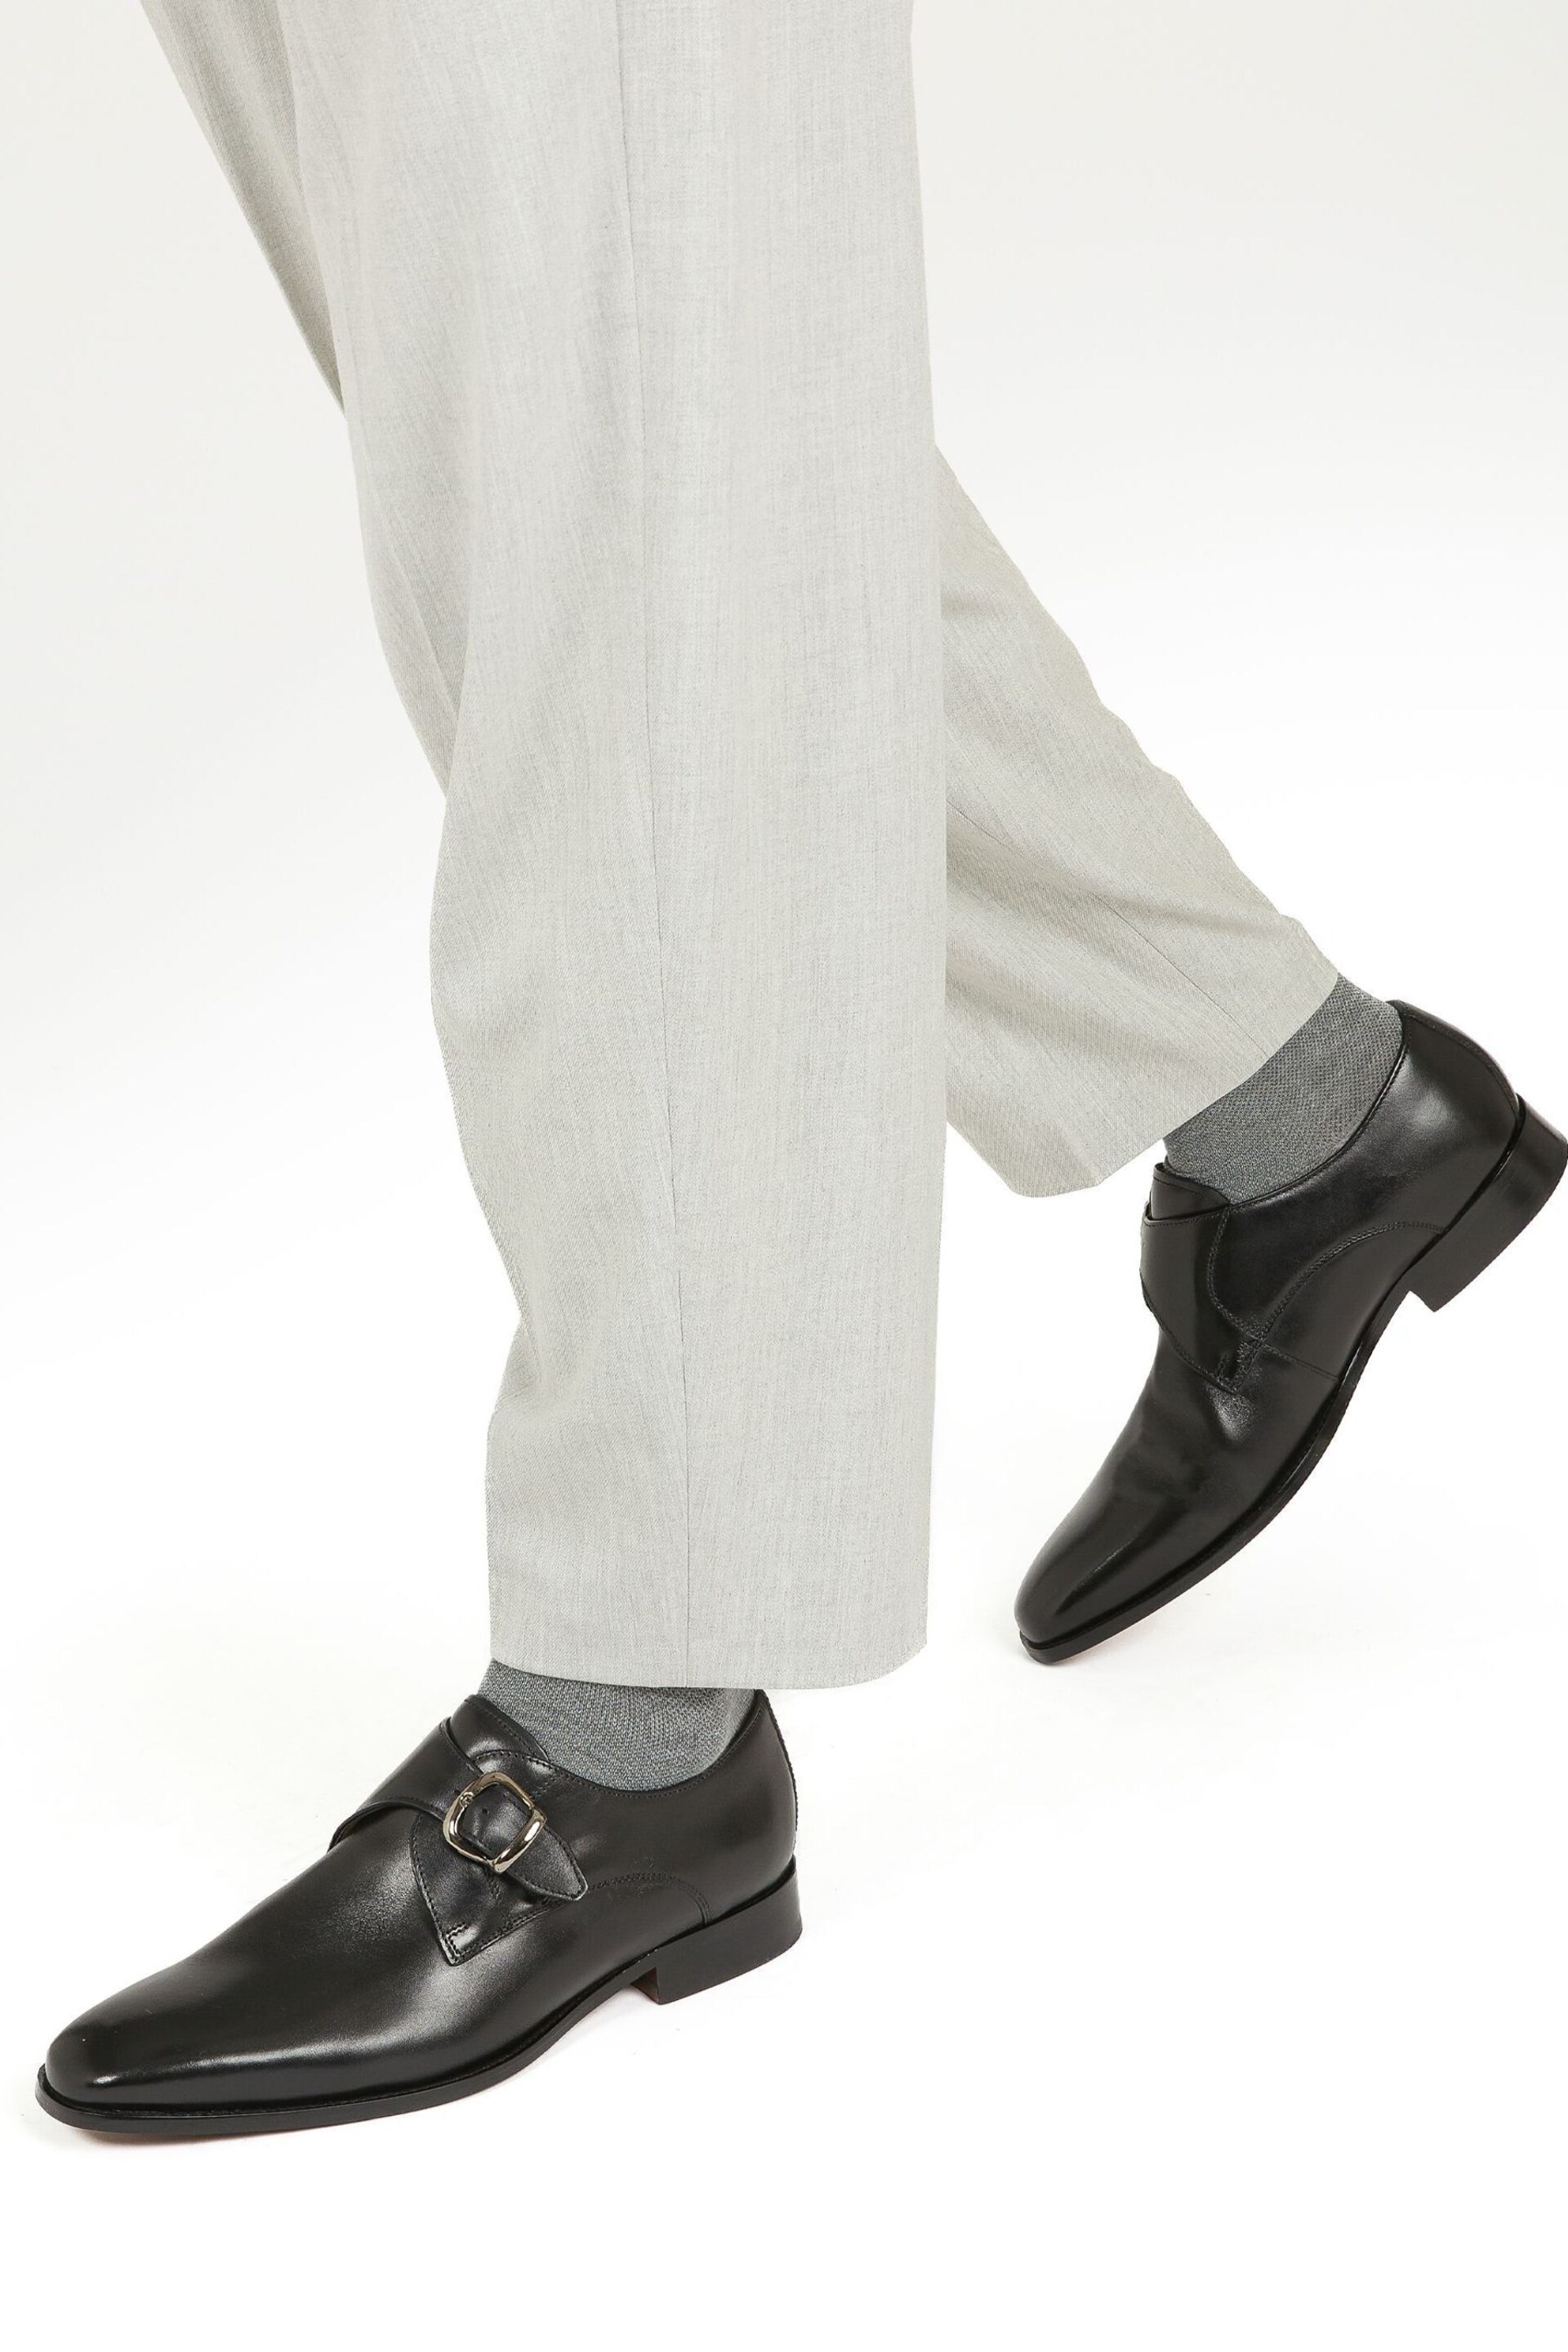 Jones Bootmaker Justin Men's Leather Single Strap Monk Shoes - Image 1 of 6